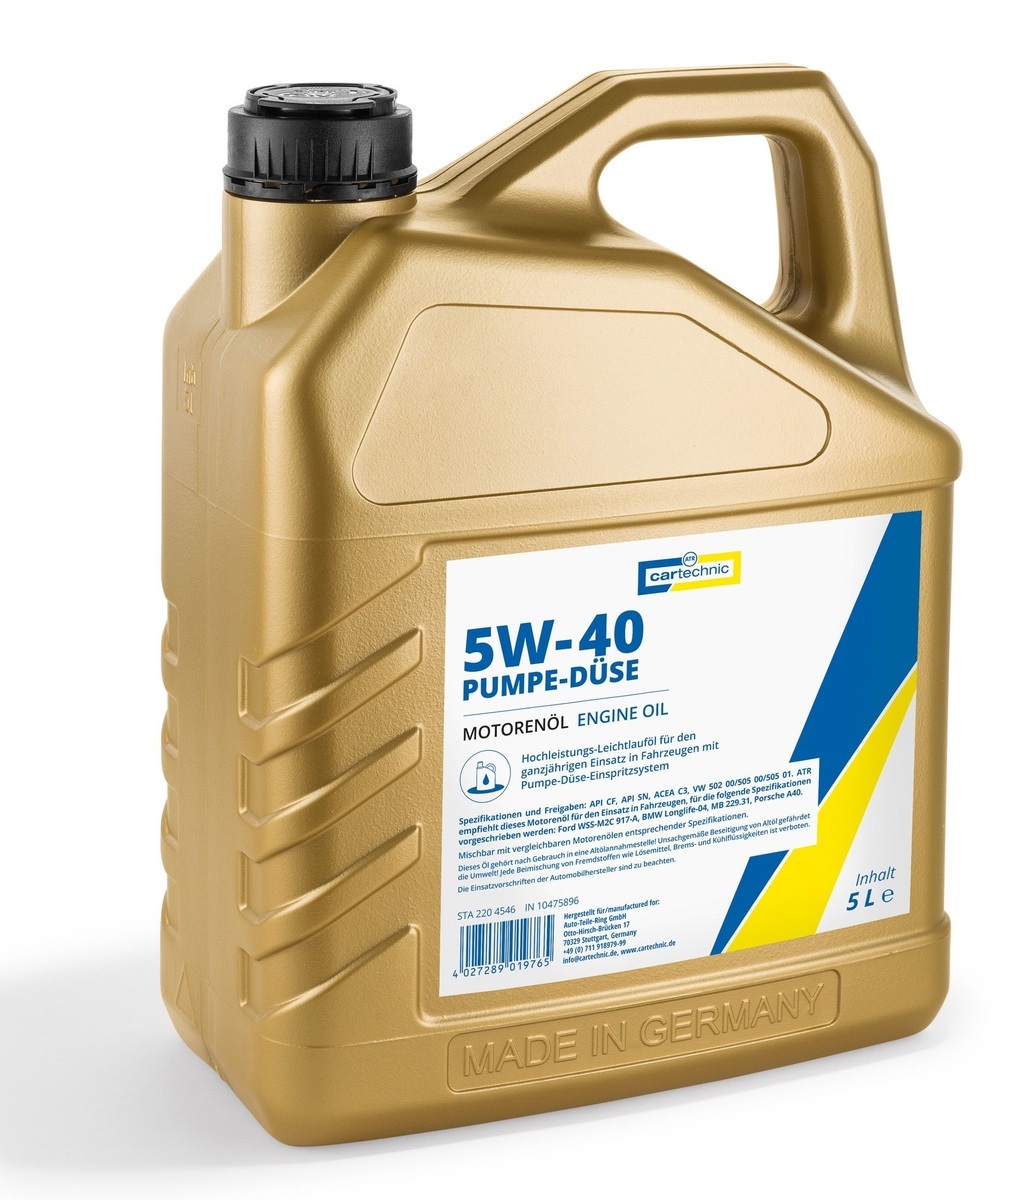 Motorový olej 5W-40 Pumpe-Düse